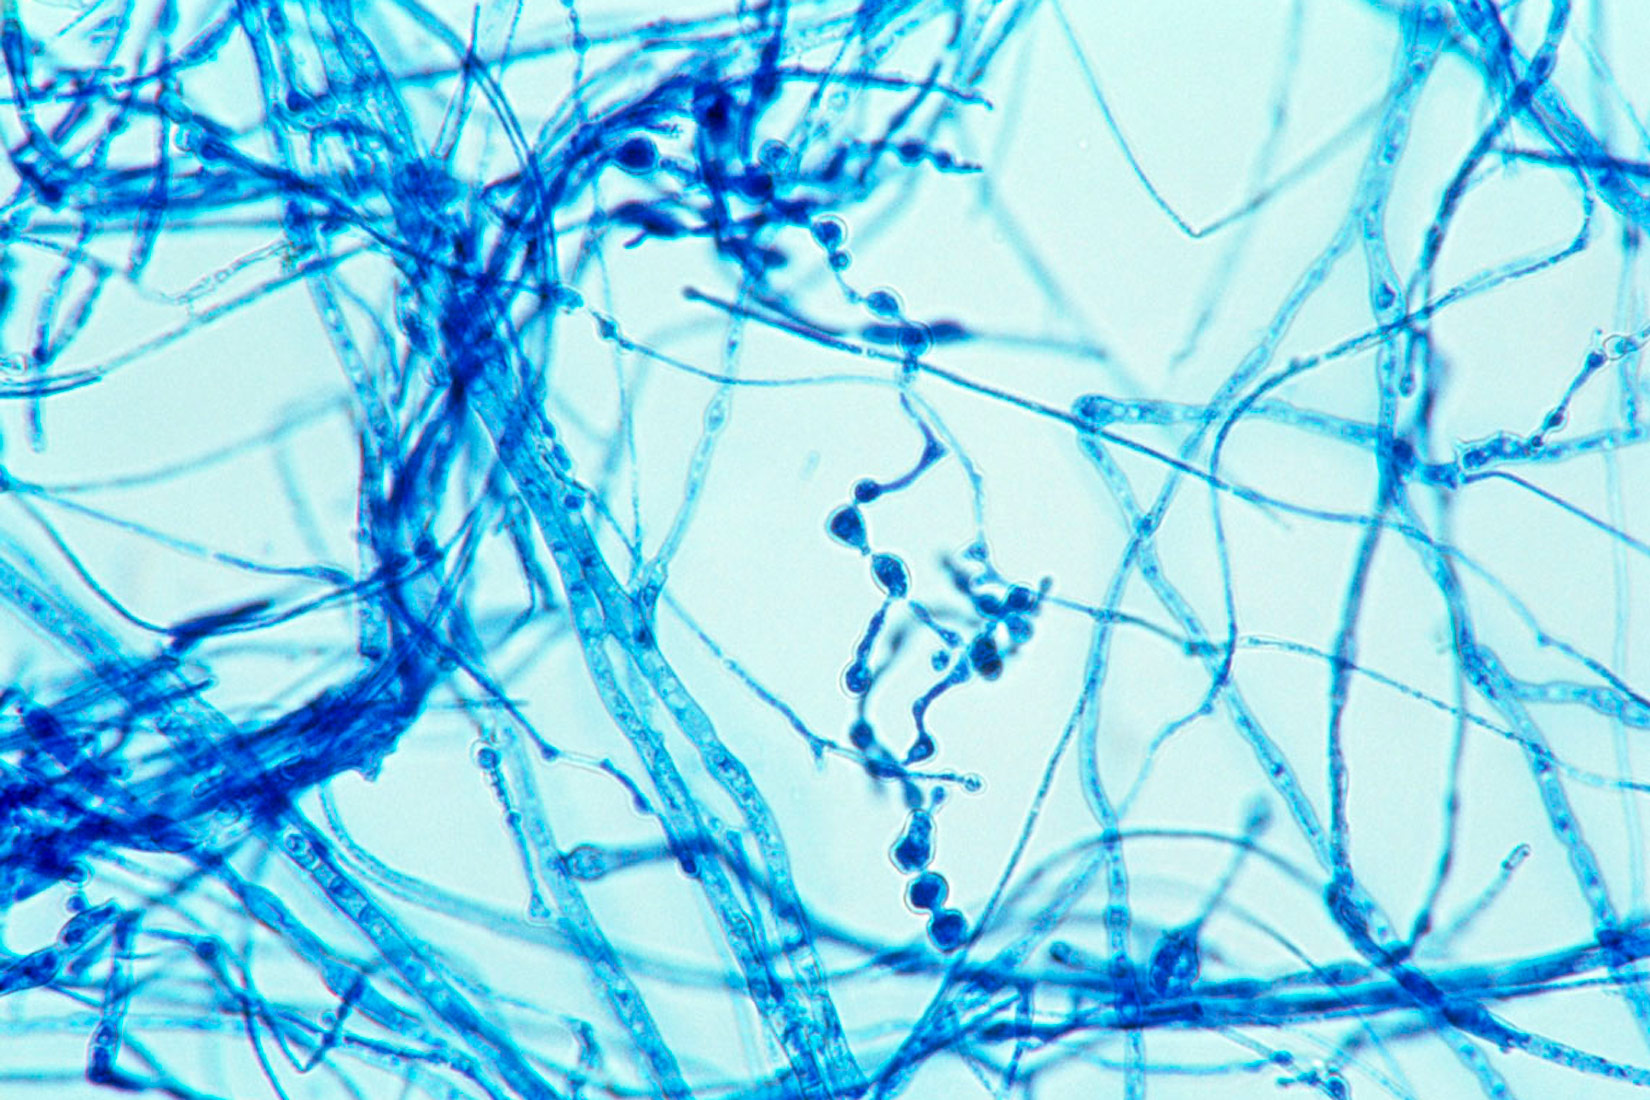 Slika prikazuje nitaste hife gljiva, vrlo isprepletene, vrlo upadljive plave boje.